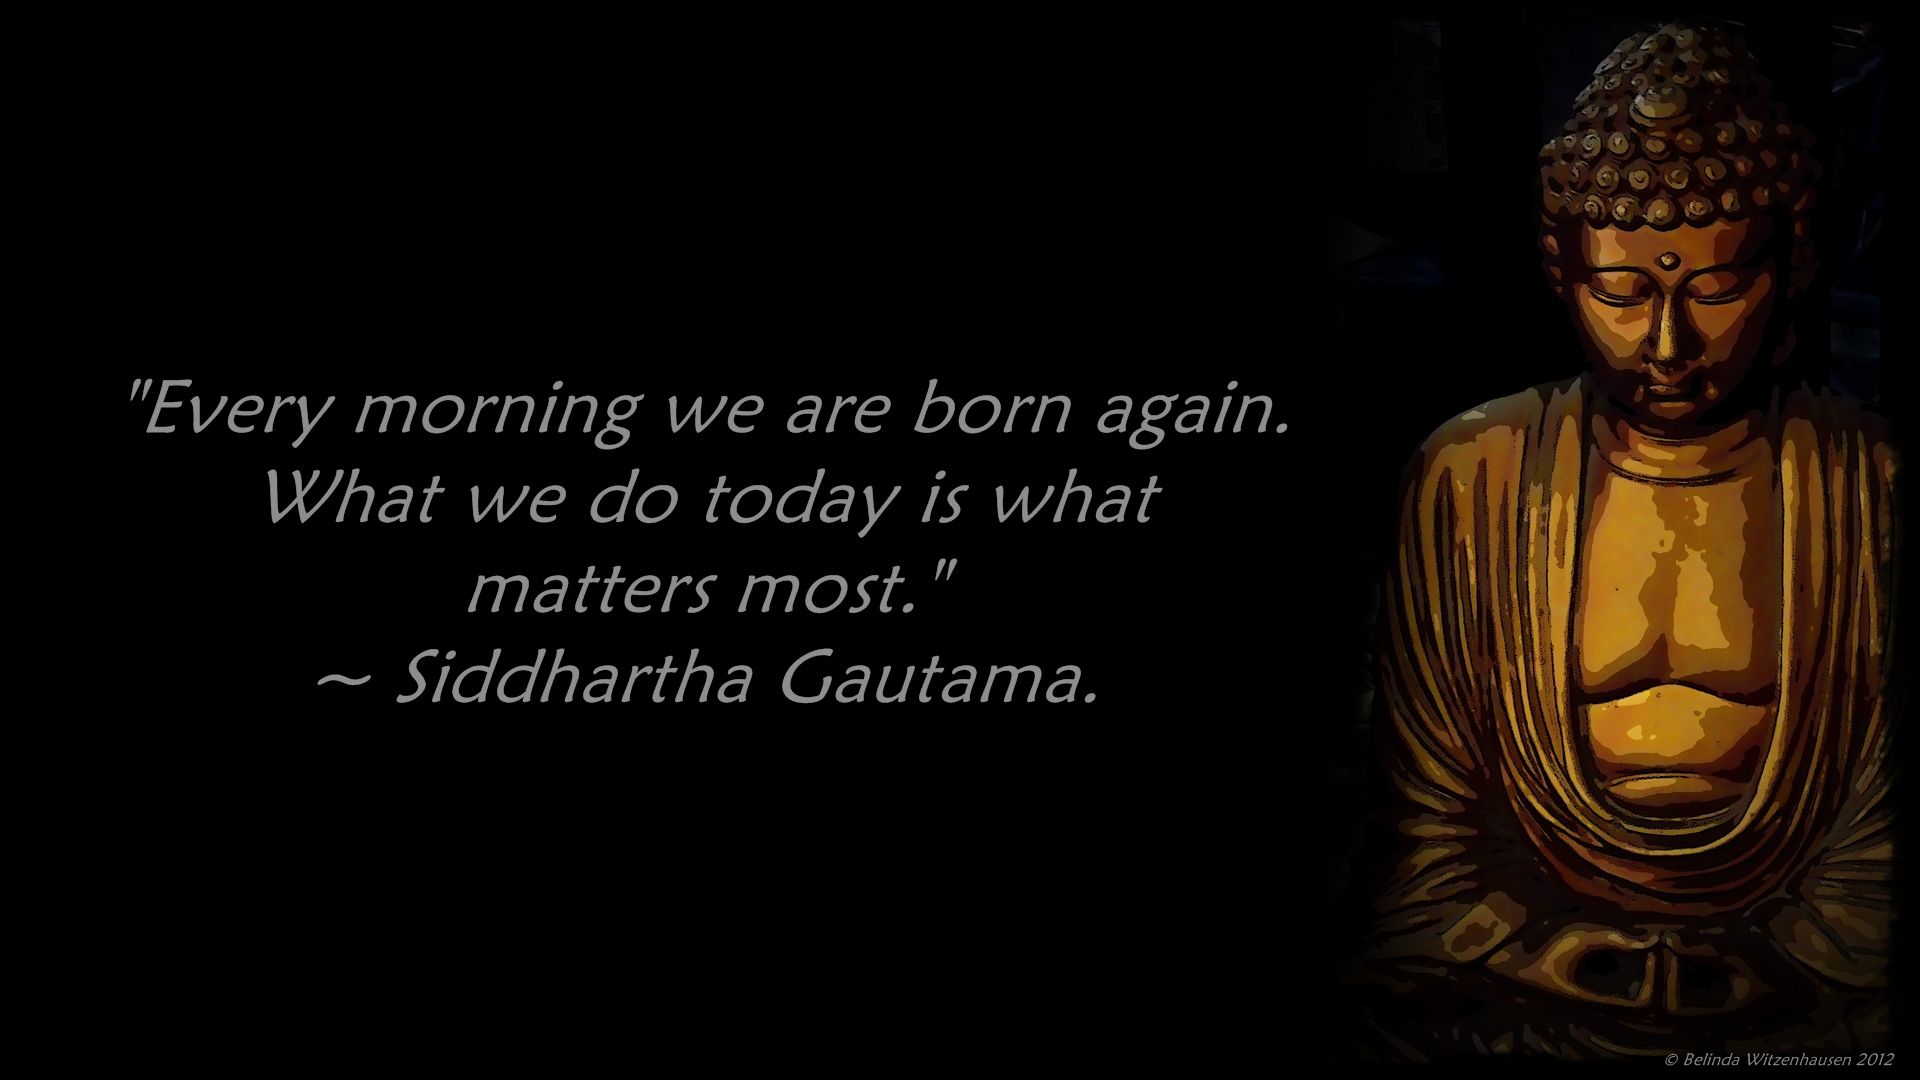 Gautama Buddha Wallpaper With Quotes | Allpix.Club